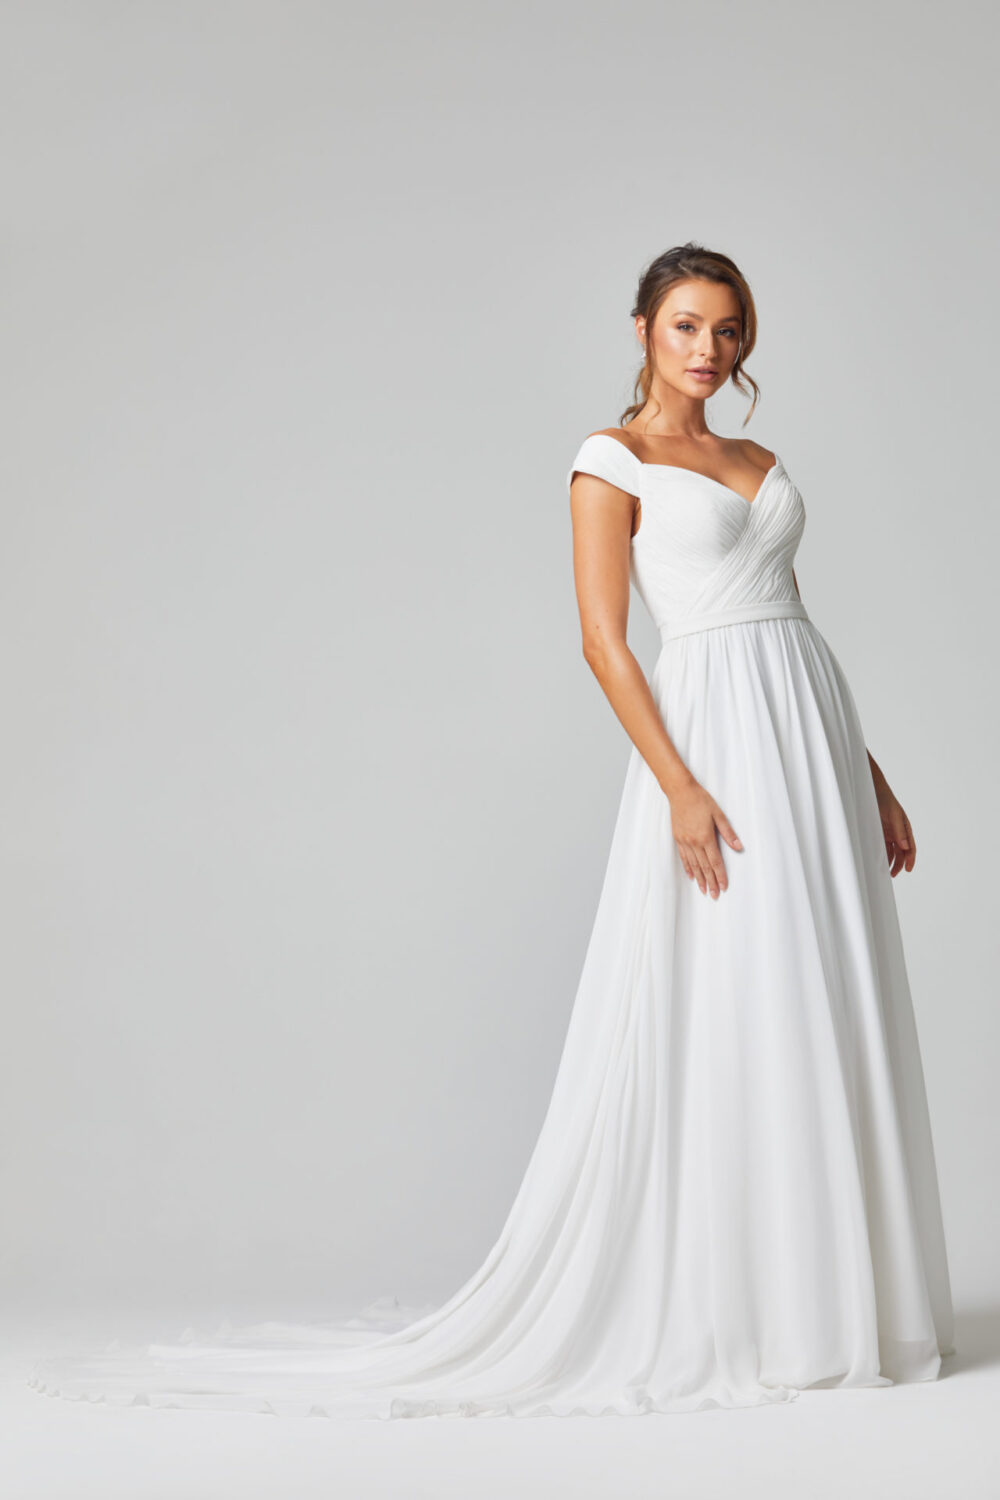 ANNABELLE TC323 Wedding Dresses dress by Tania Olsen Designs